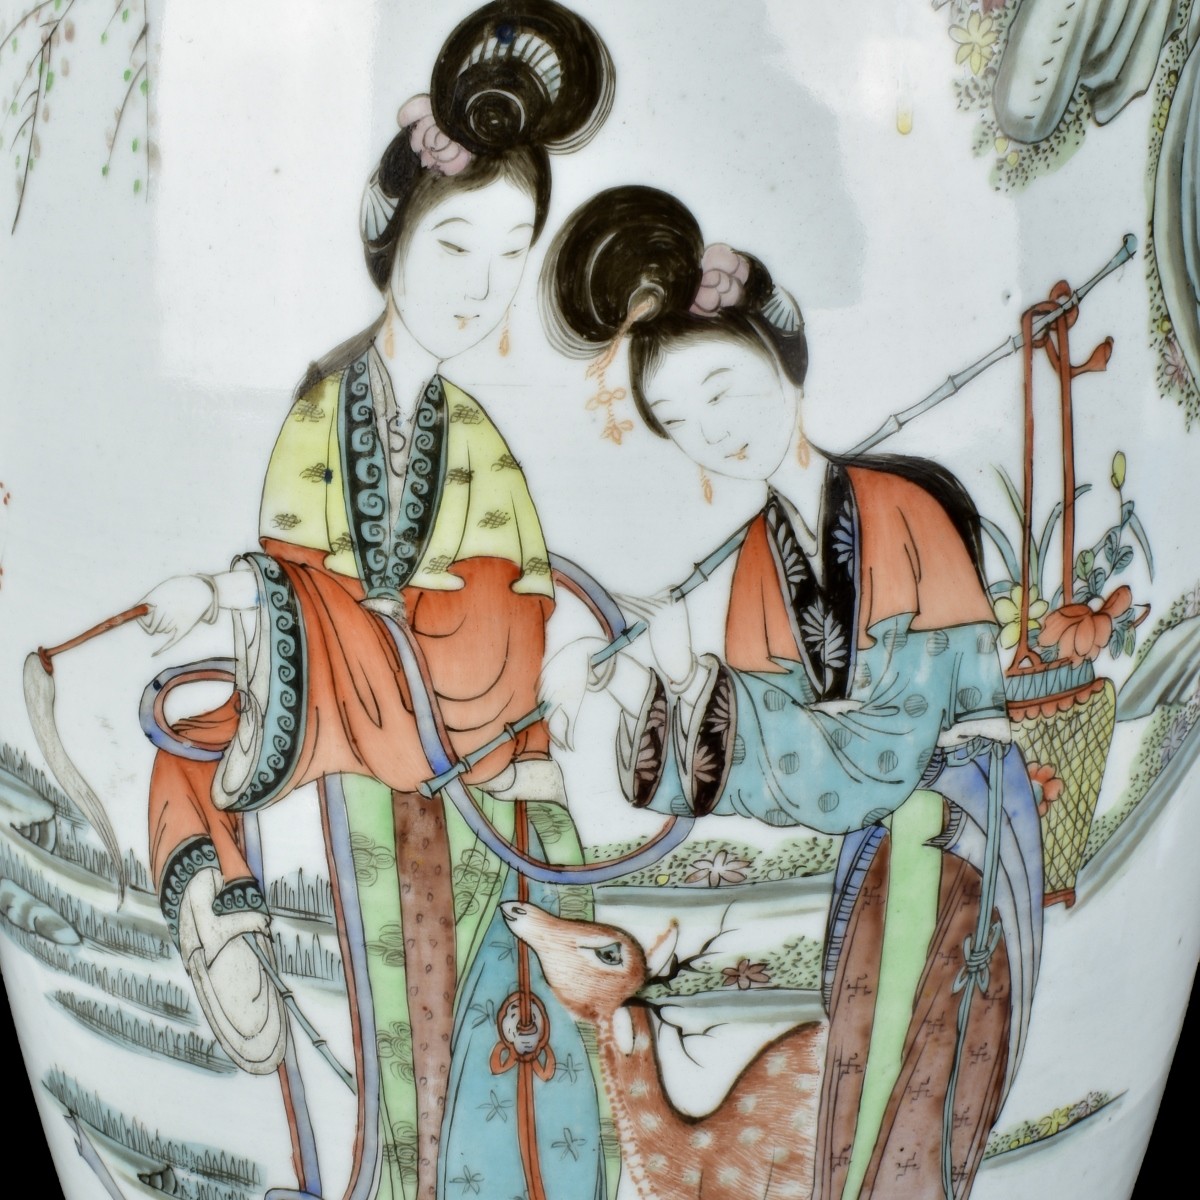 Large Japanese Porcelain Vase